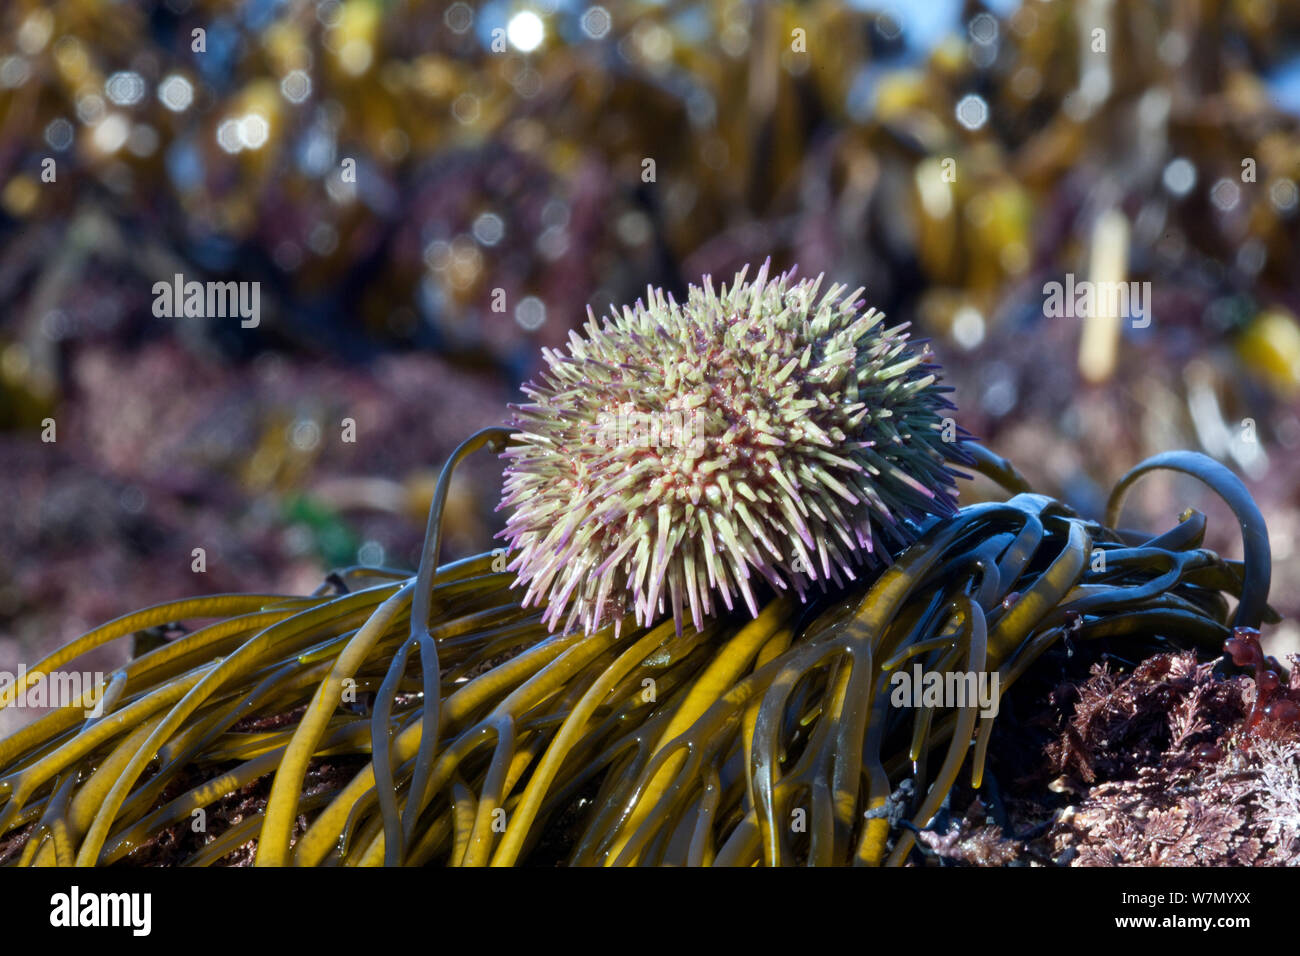 Grüner Seeigel (Psammechinus miliaris) Channel Islands, UK März Stockfoto